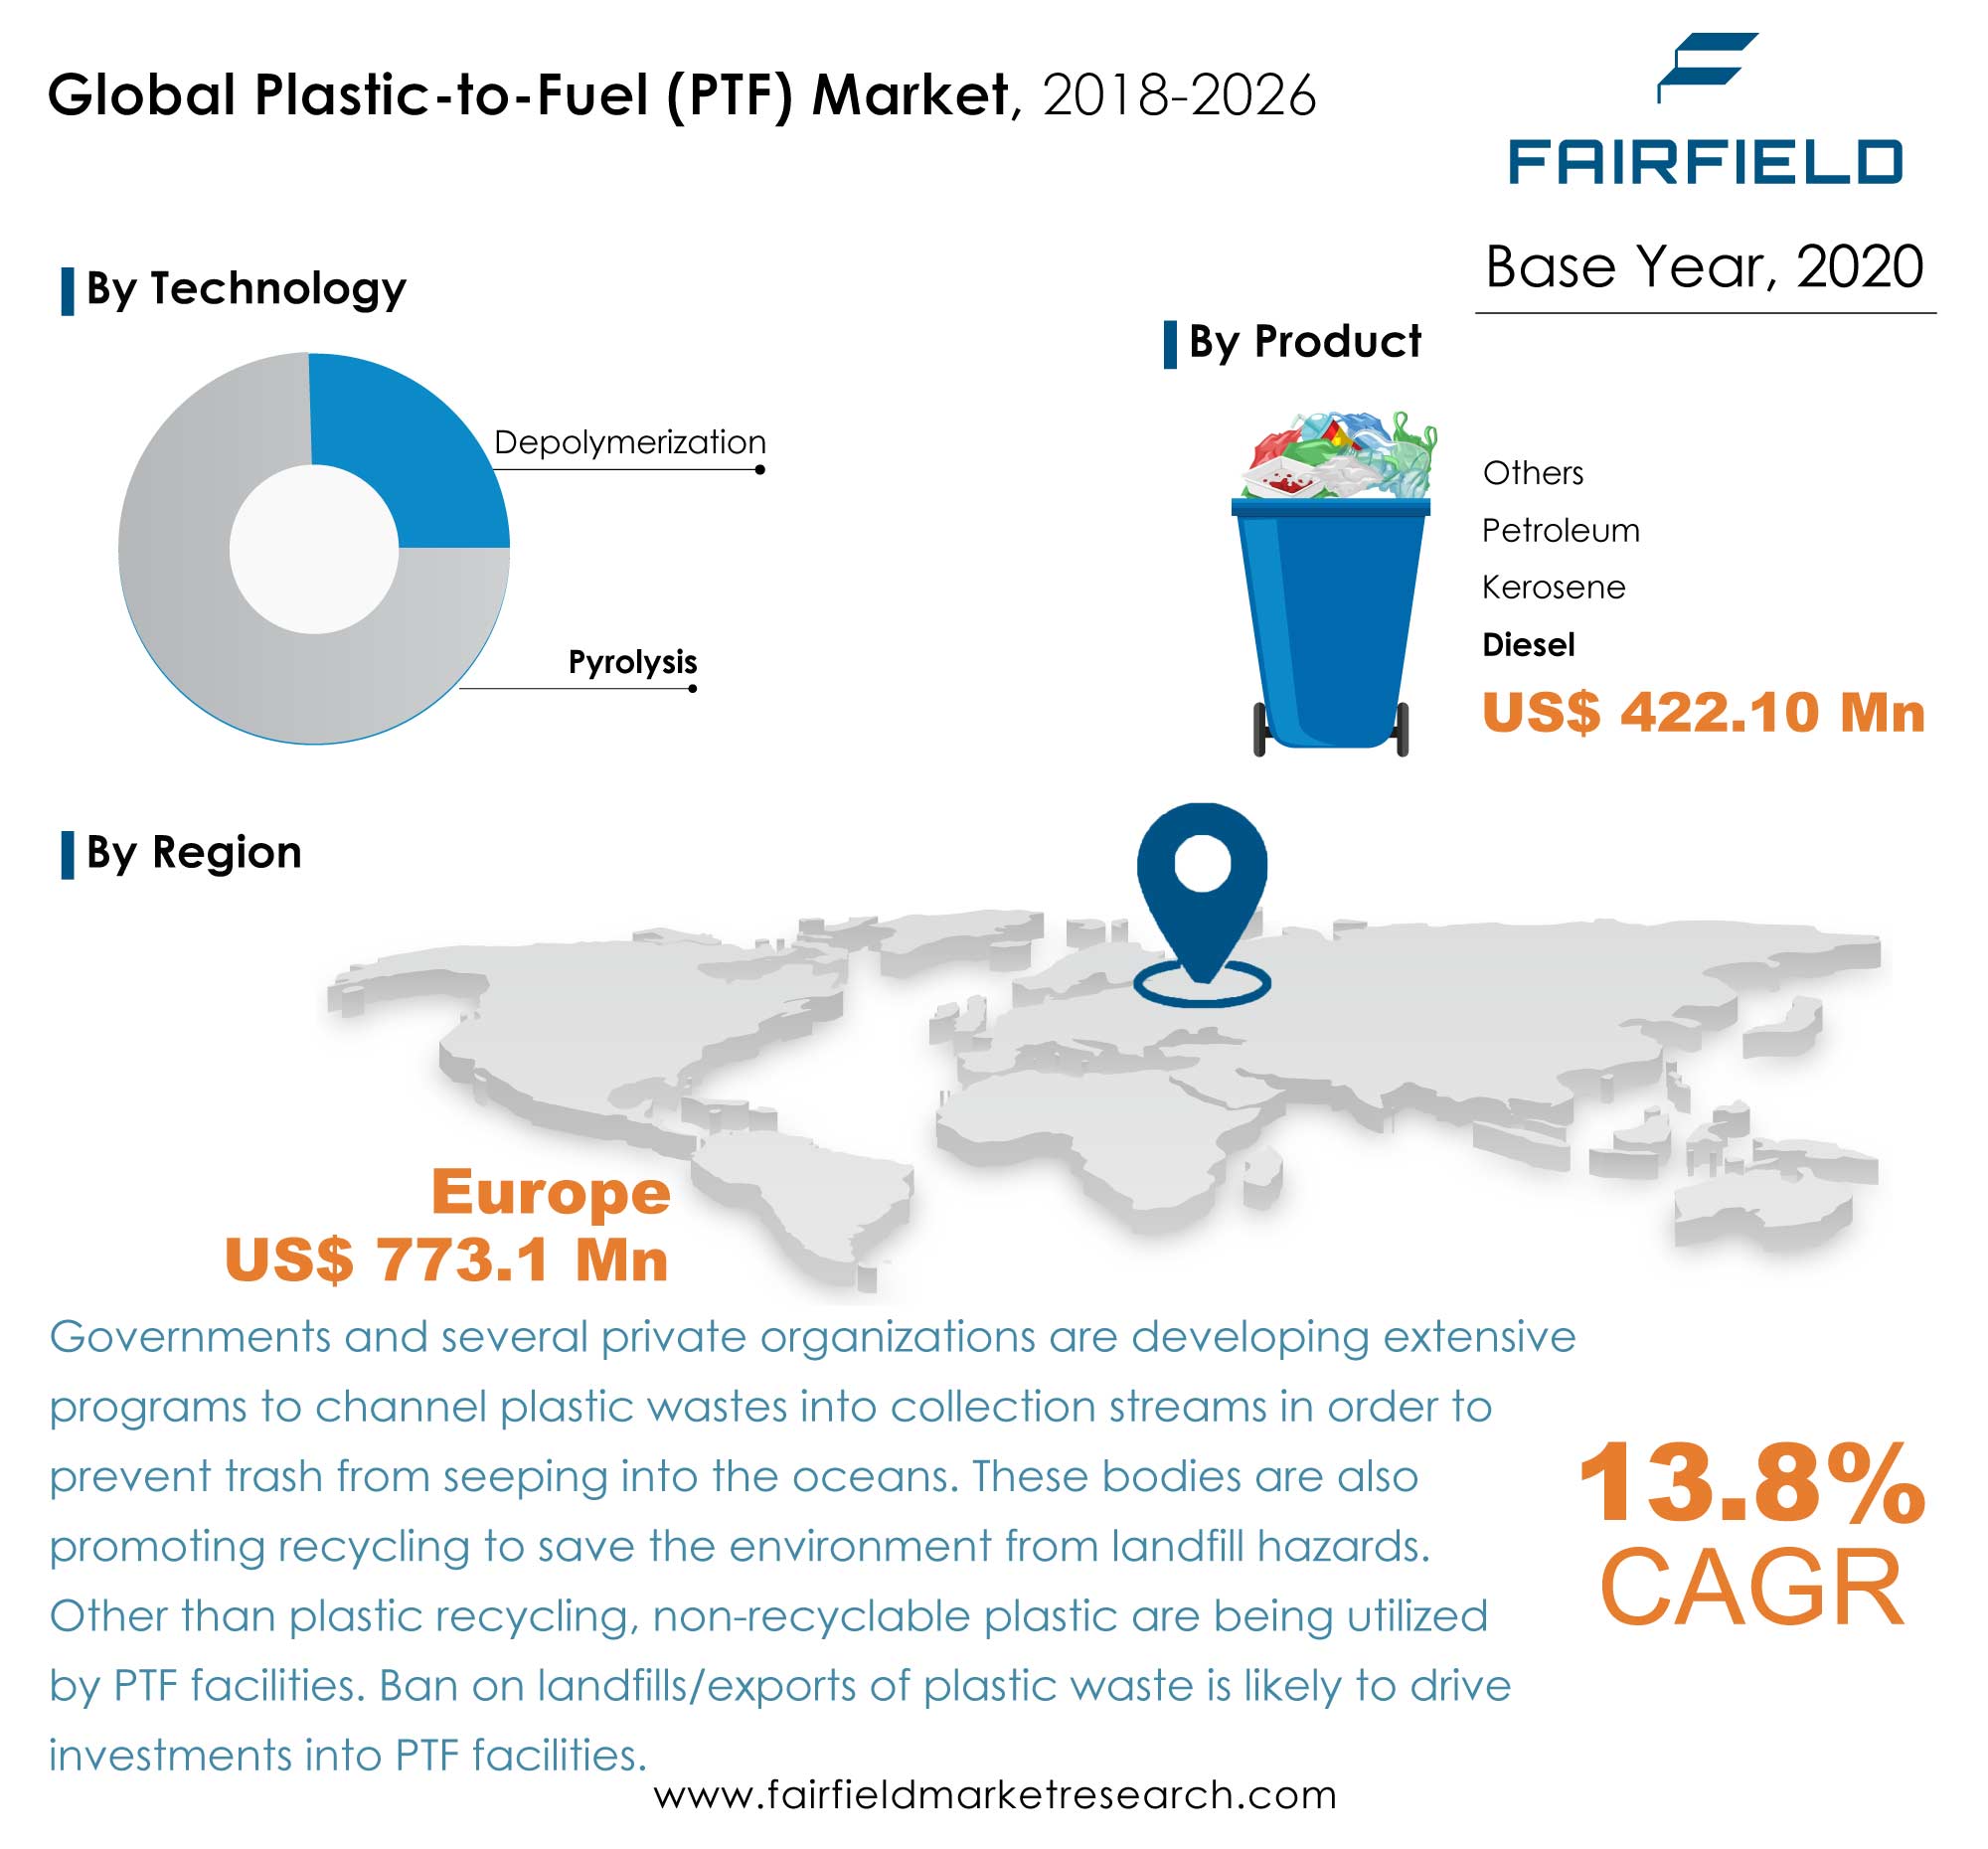 Plastic-to-Fuel (PTF) market